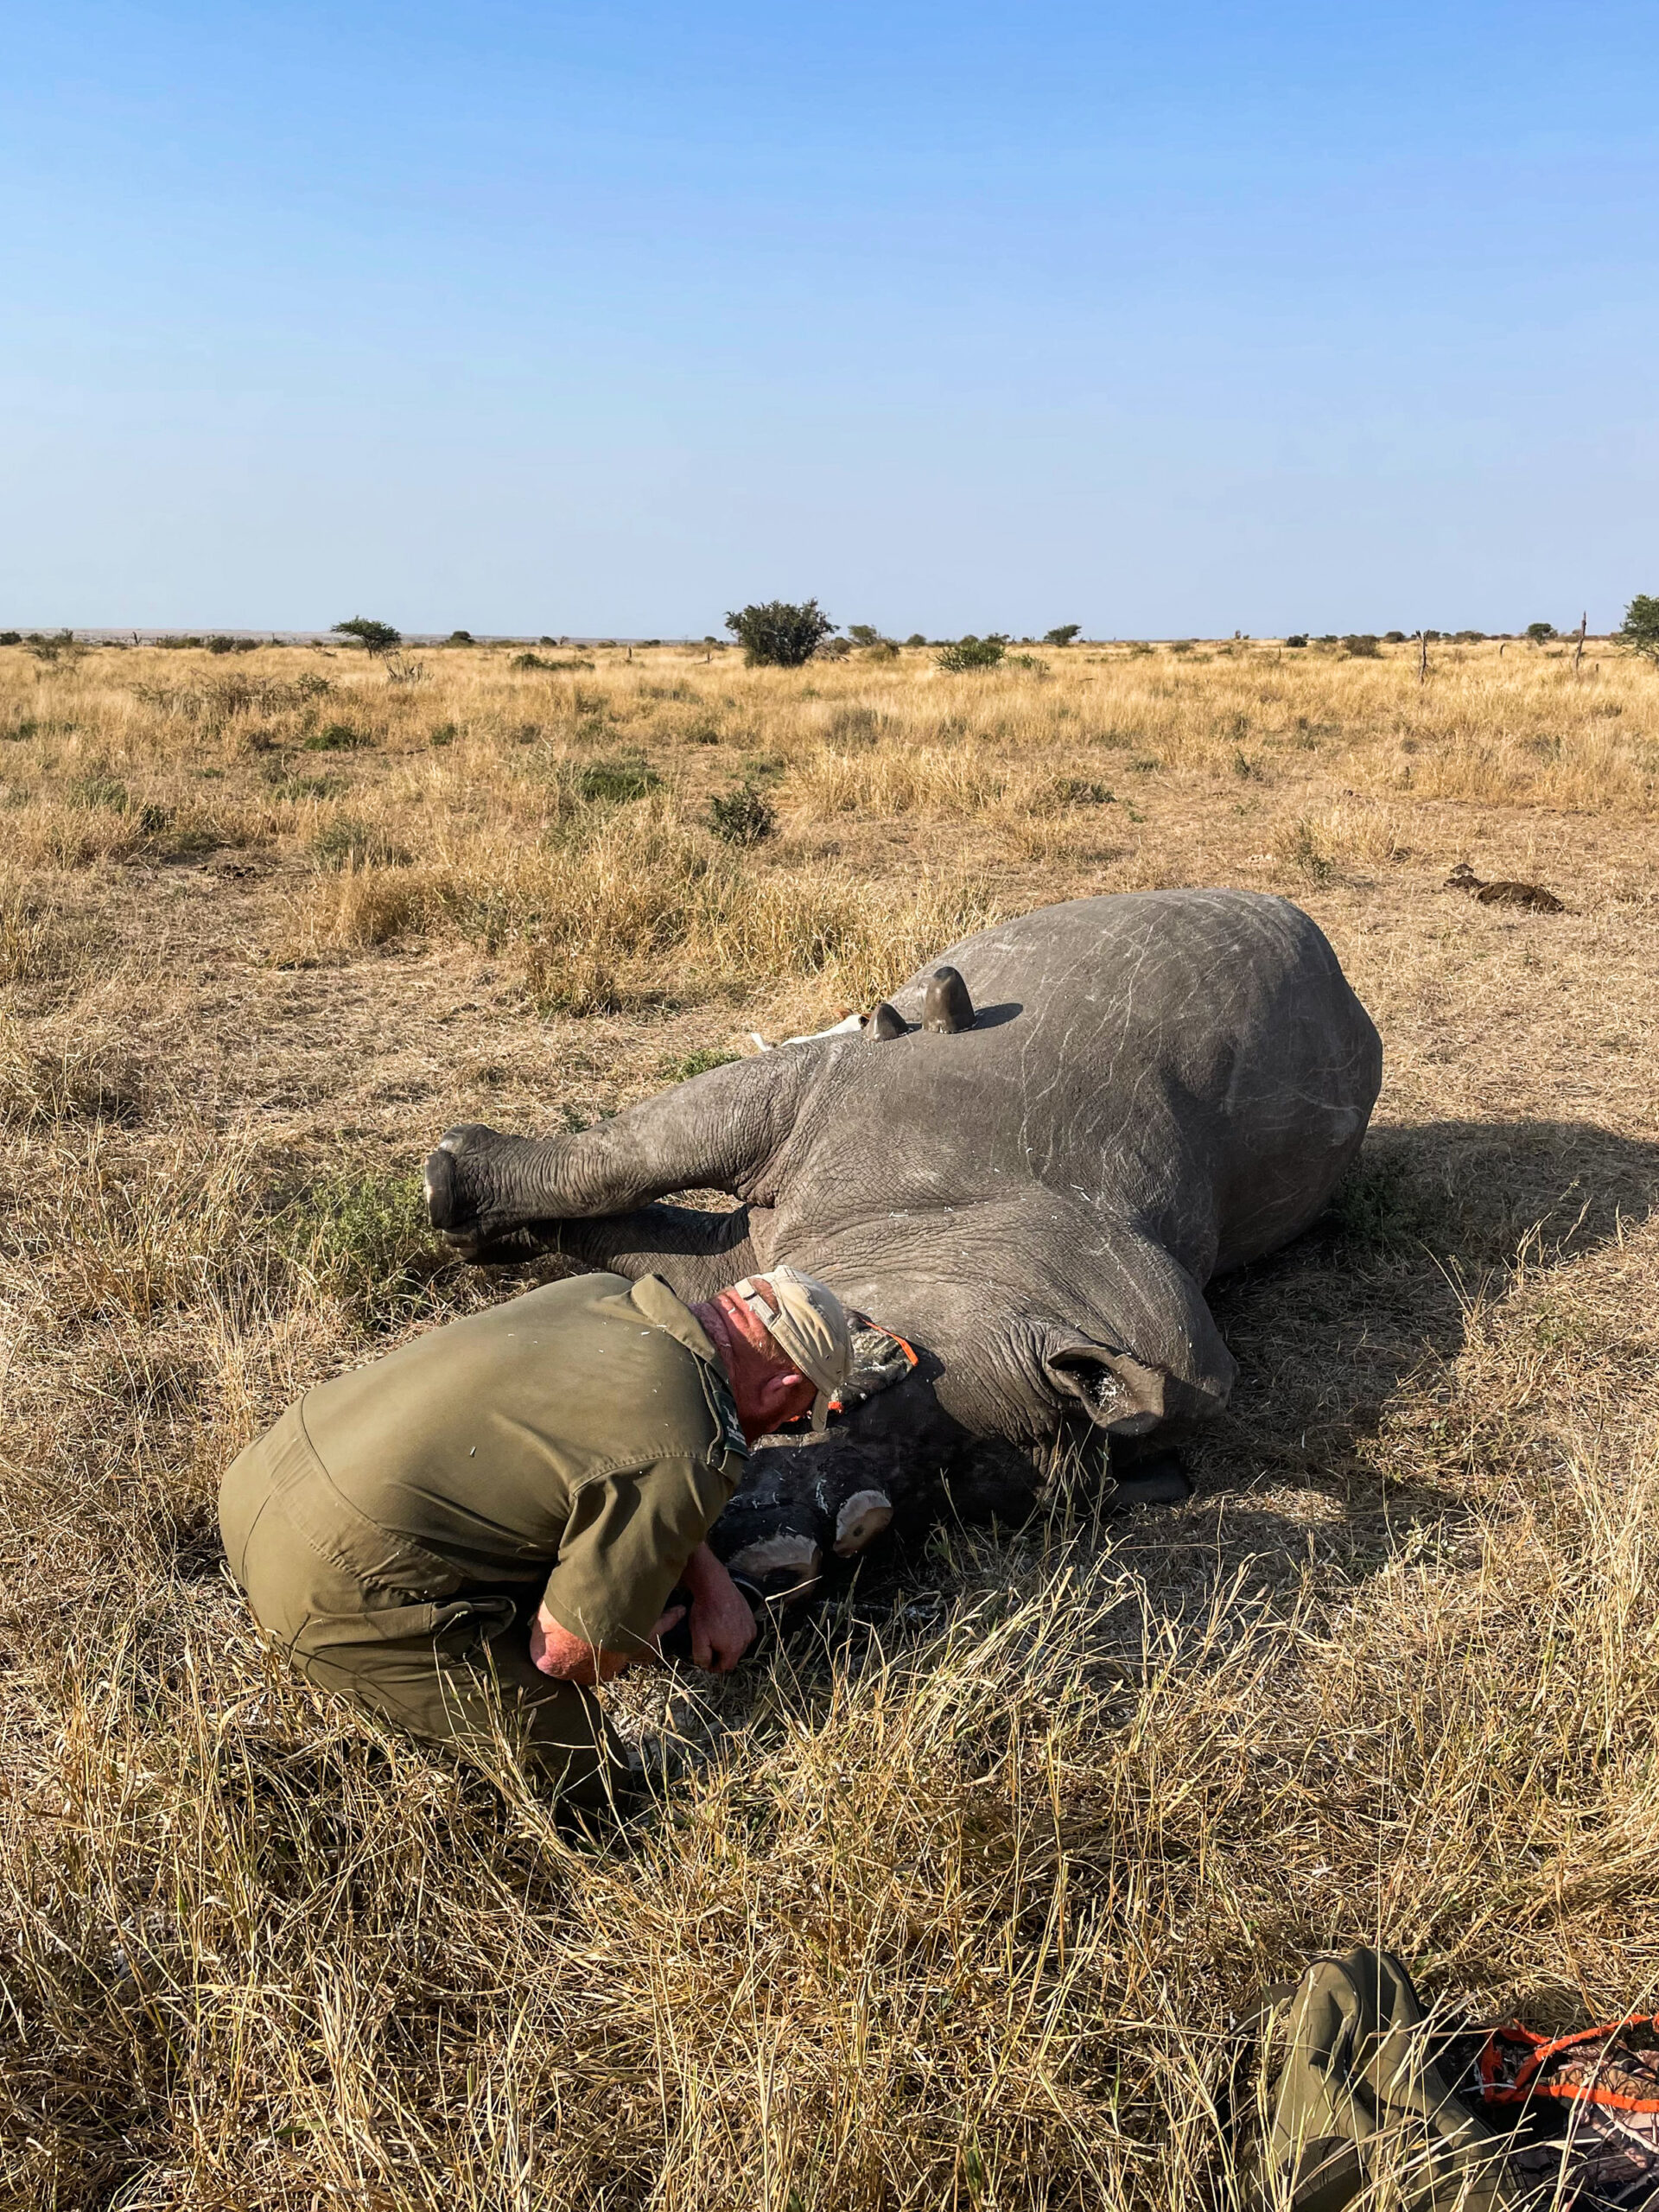 Rhino Horn removal